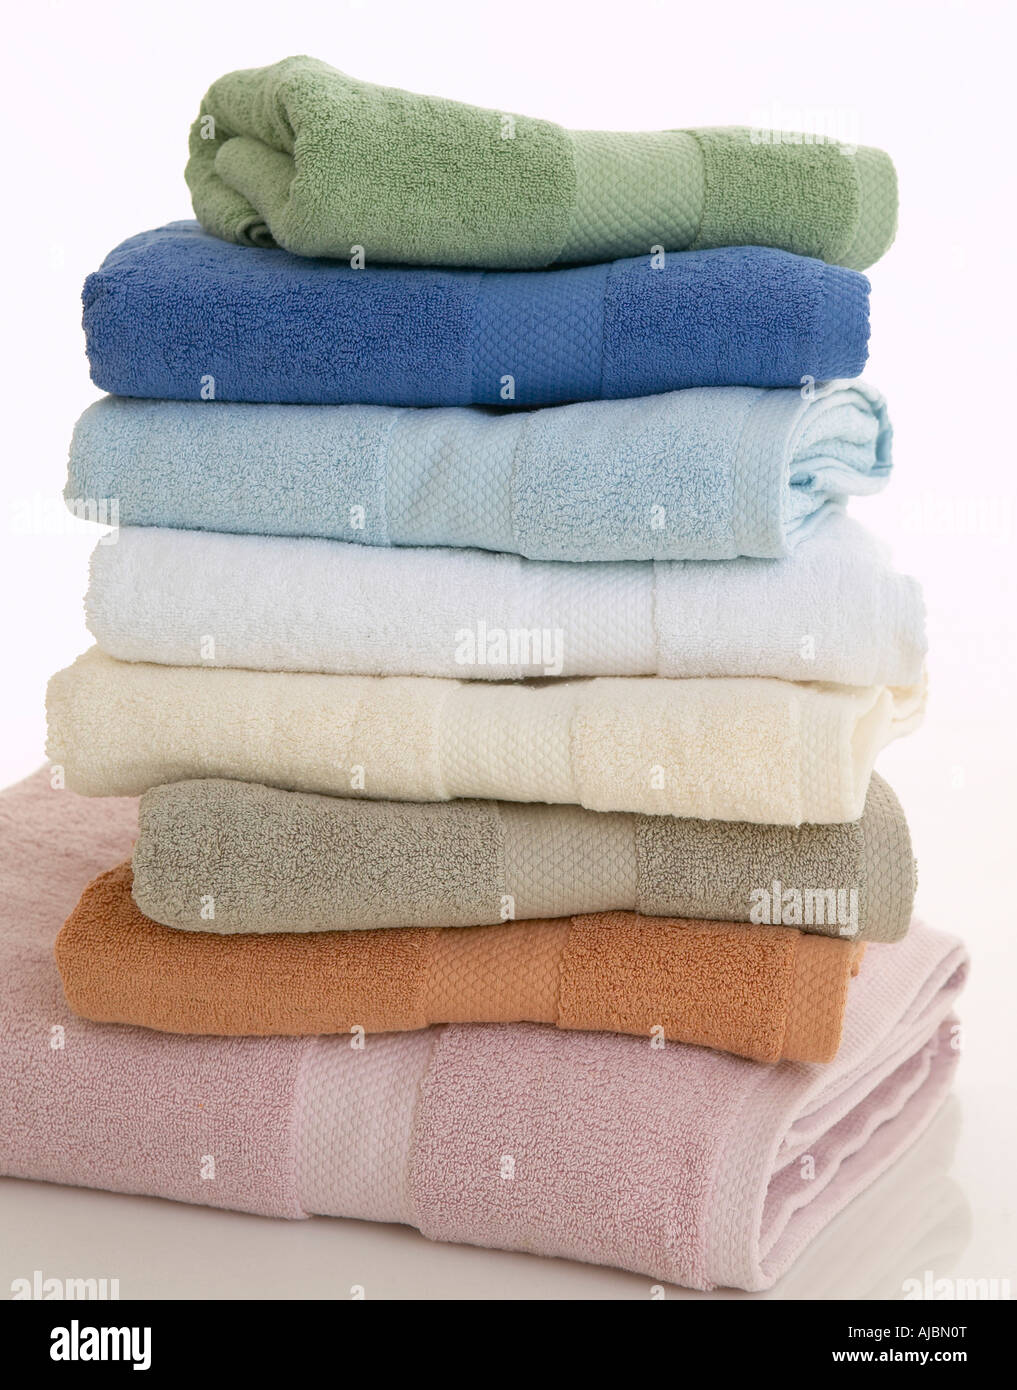 colourful bath towels